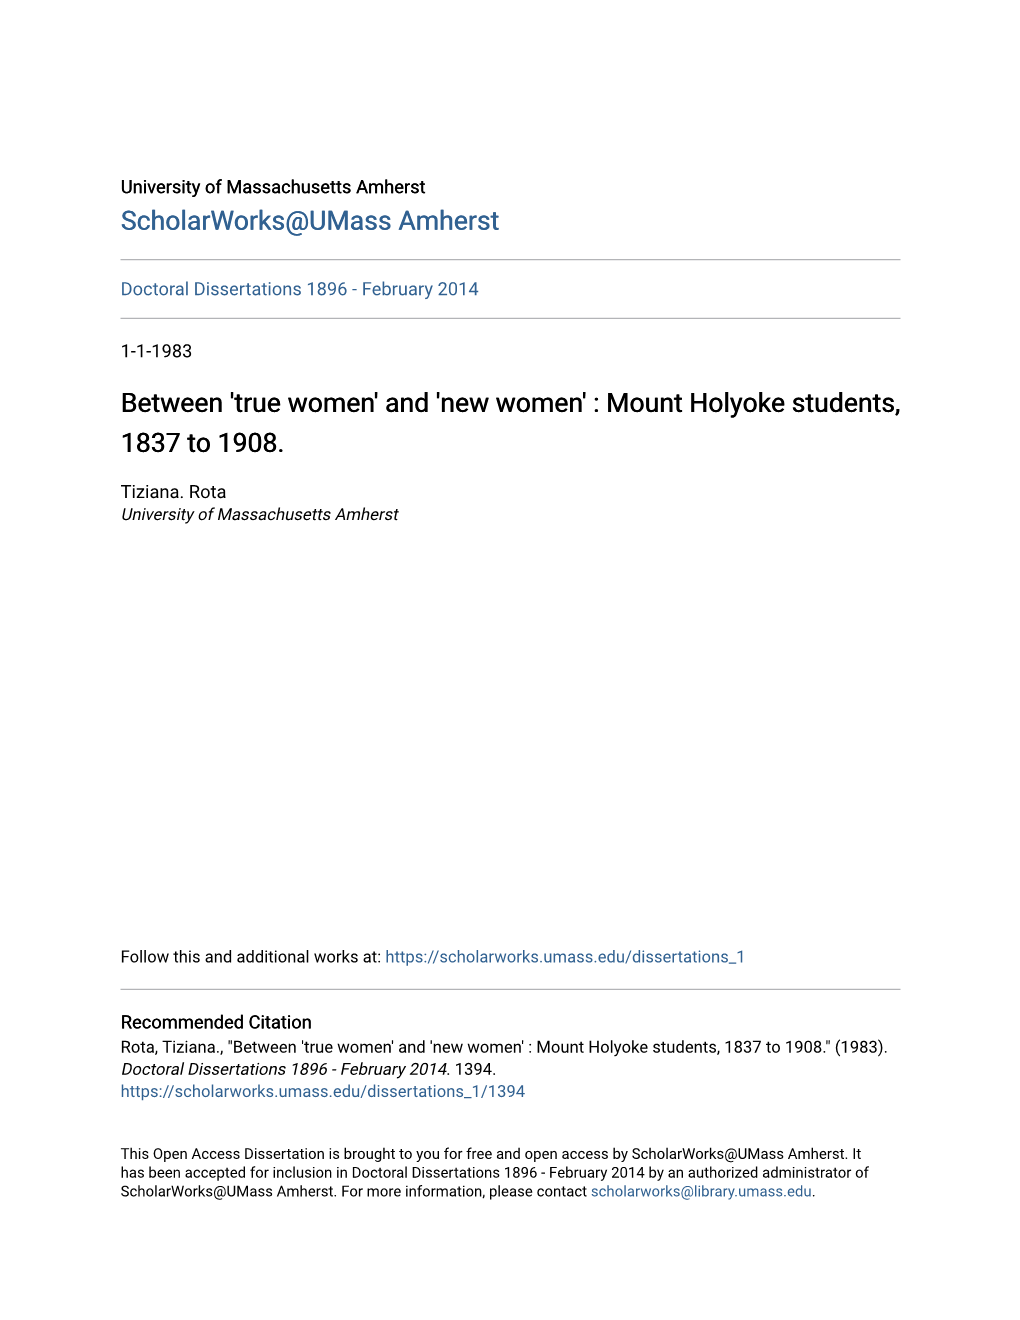 'New Women' : Mount Holyoke Students, 1837 to 1908